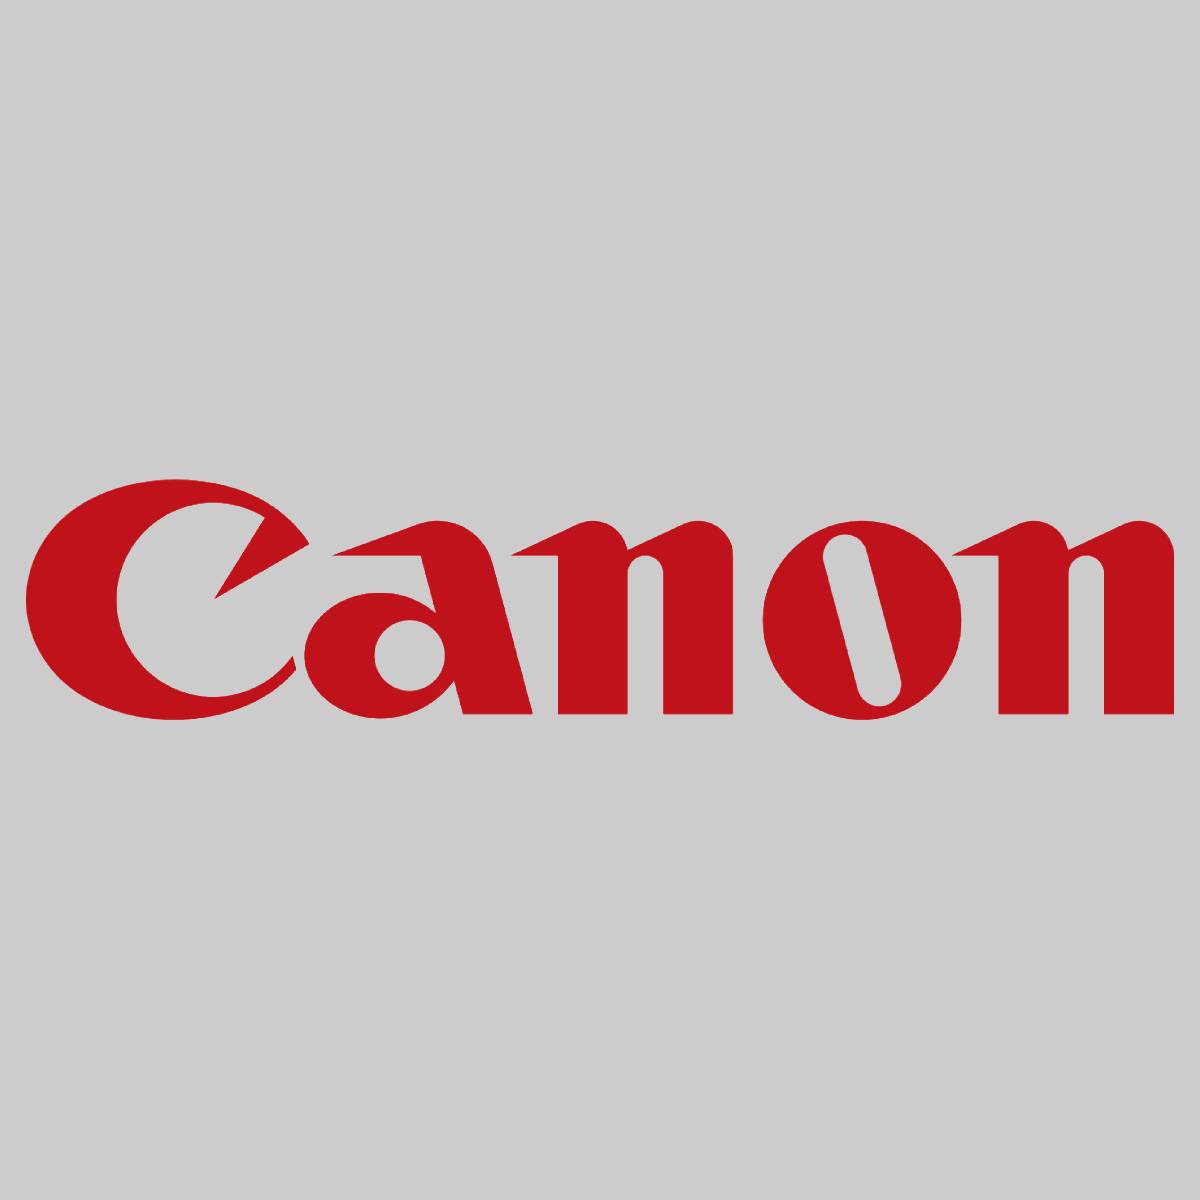 "Original Canon Cartridge Cyan 6262B011 für LBP 7780 NEU OVP